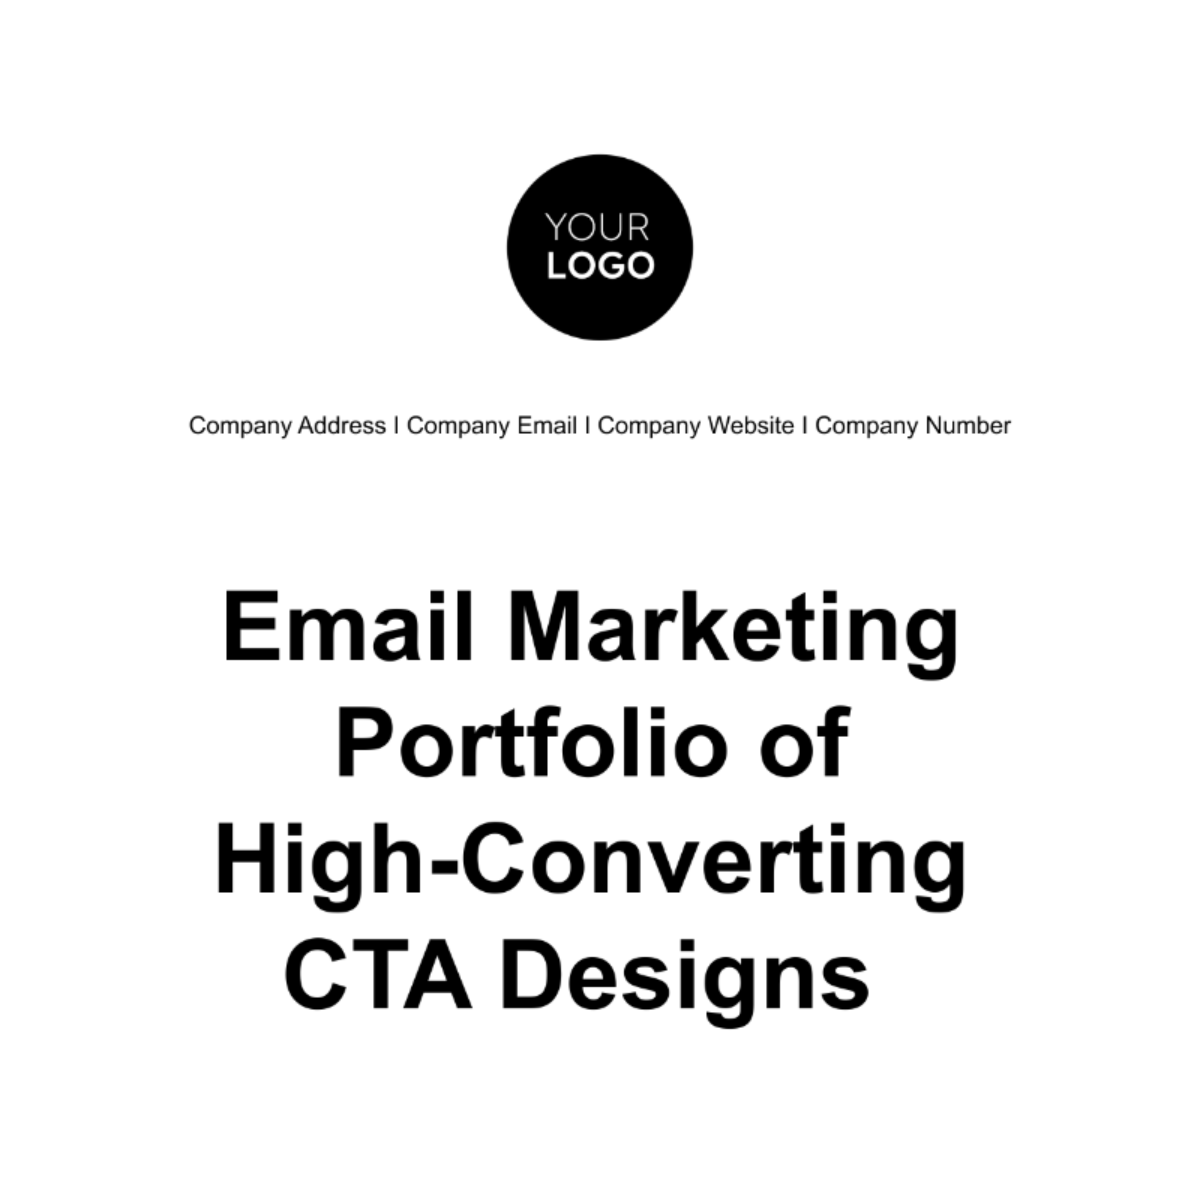 Free Email Marketing Portfolio of High-Converting CTA Designs Template